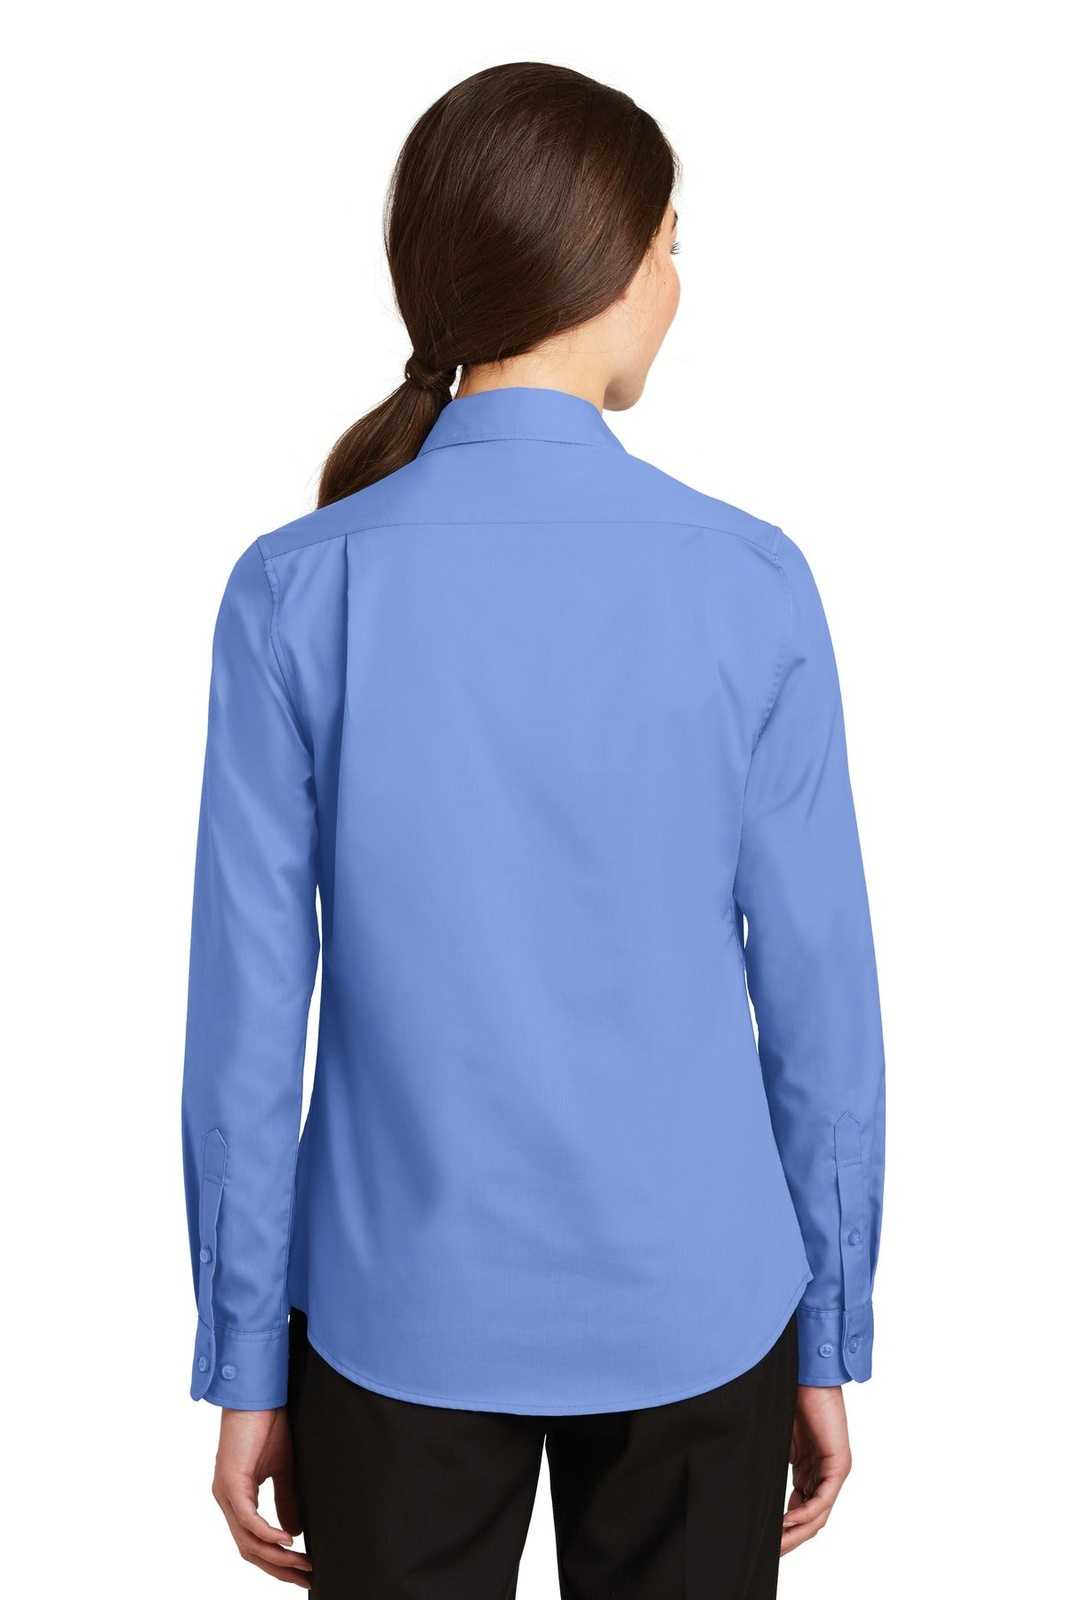 Port Authority L663 Ladies Superpro Twill Shirt - Ultramarine Blue - HIT a Double - 1